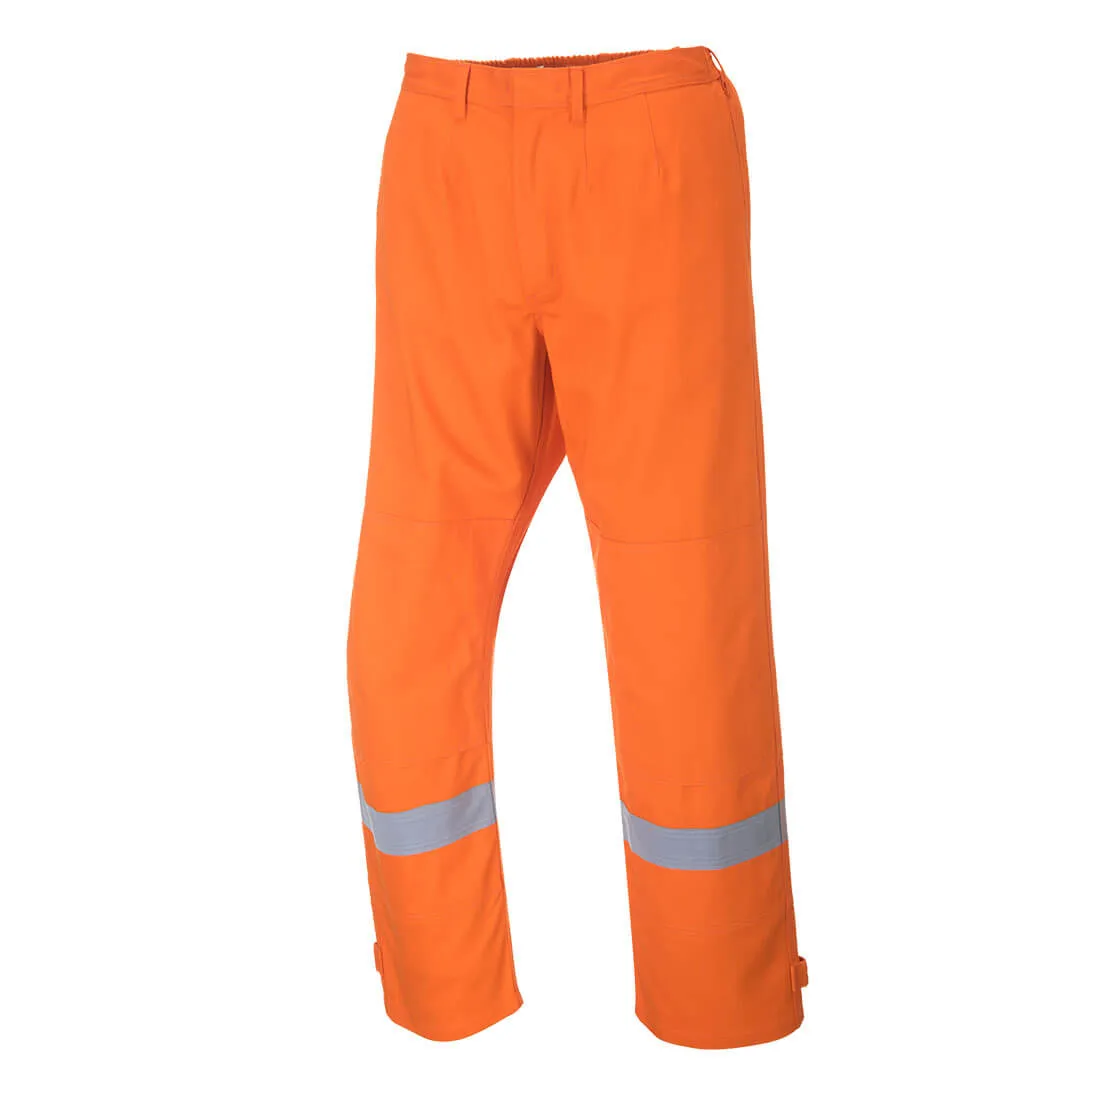 Biz Flame Plus Mens Flame Resistant Trousers - Orange, Medium, 32"